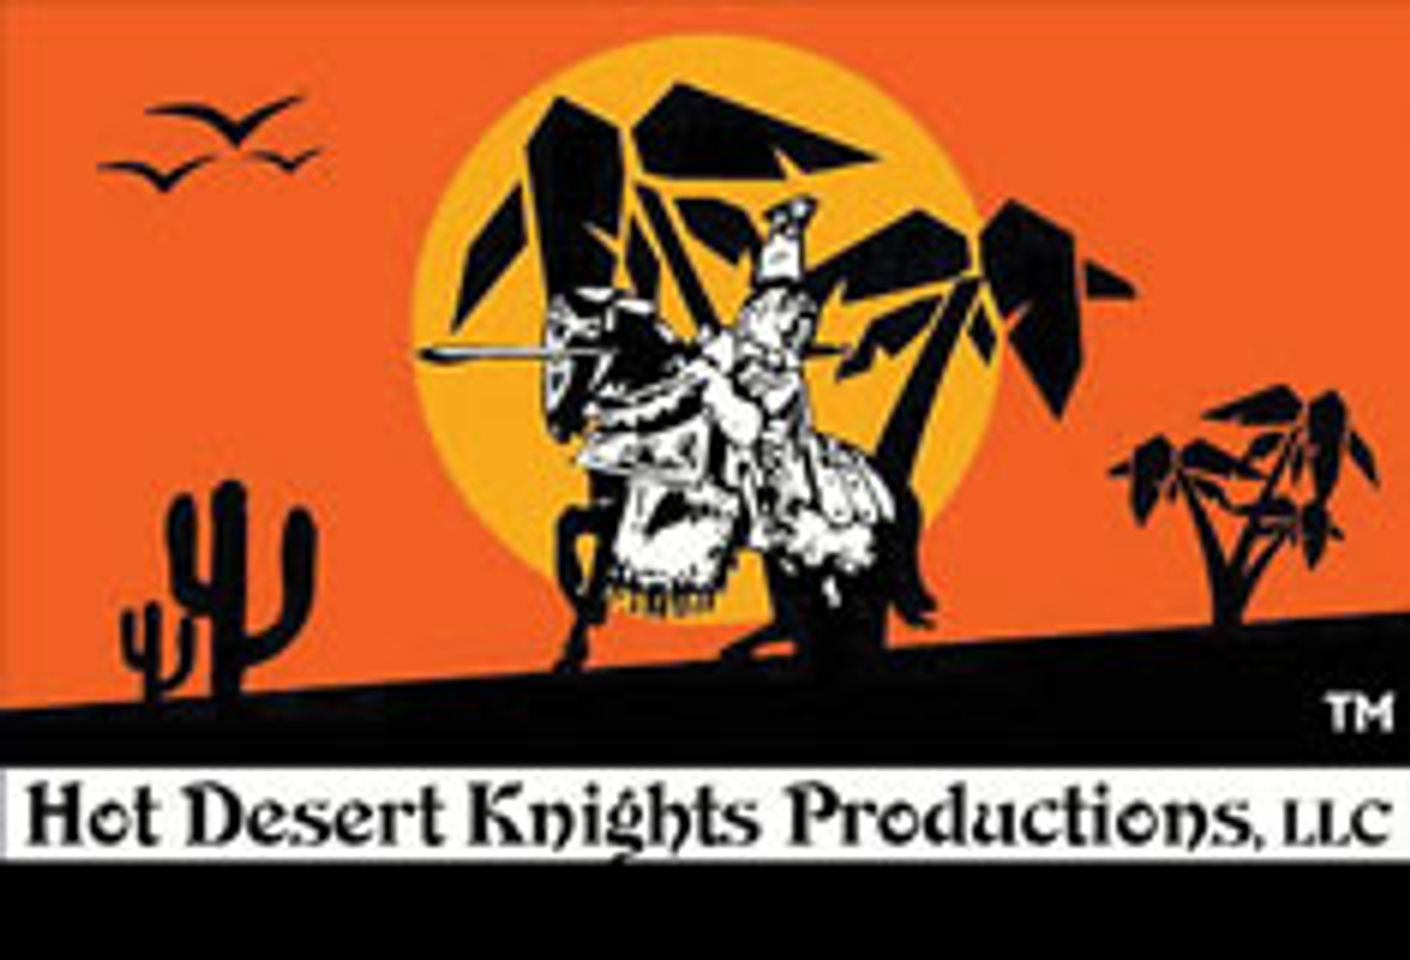 Hot Desert Knights Launches Gay Social Network Barebackers.com